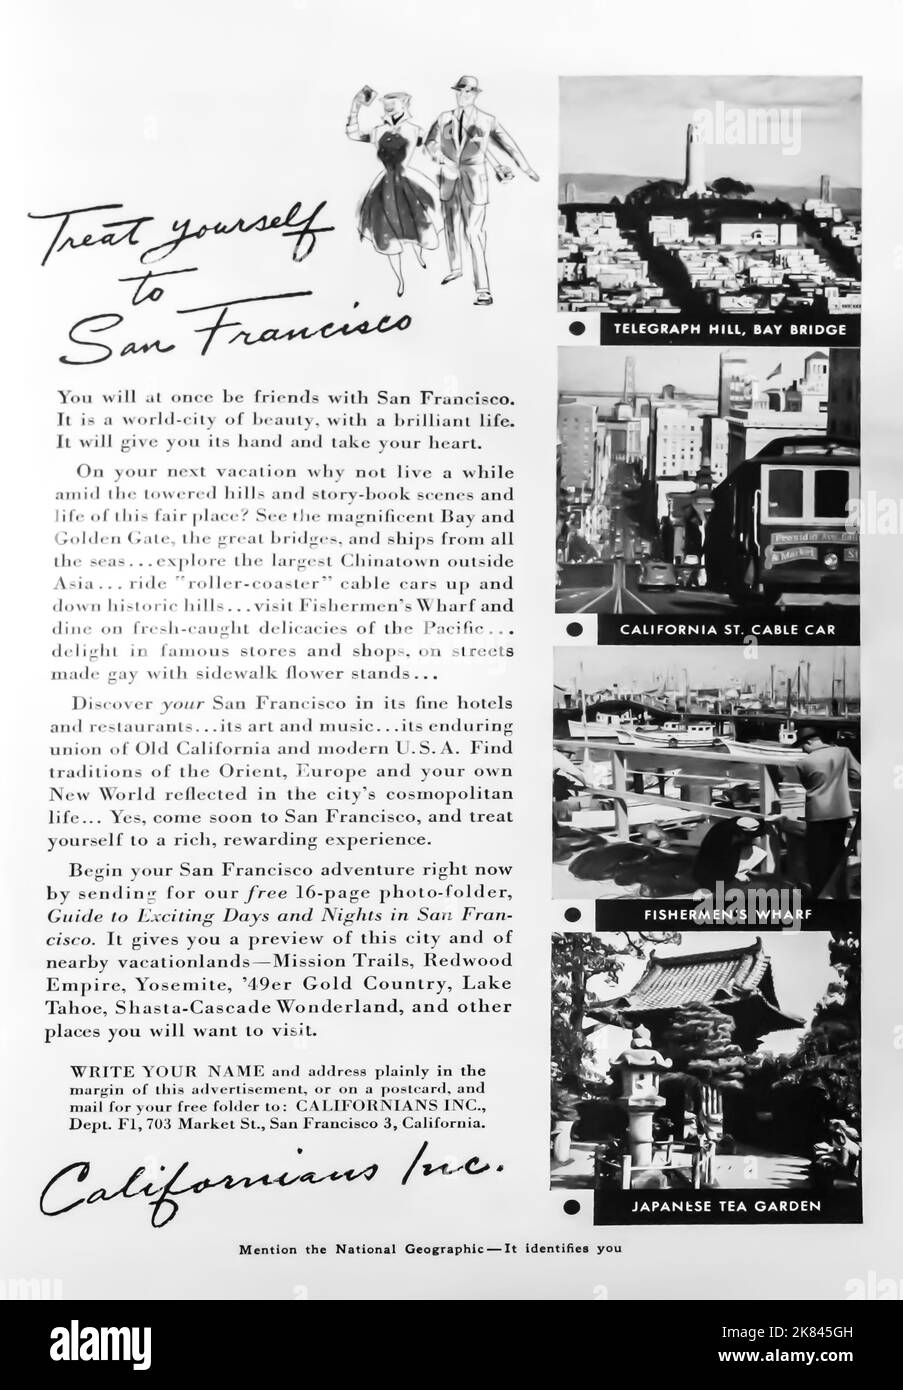 San Francisco travel - Californians Inc., vacation West Coast advert in a NatGeo magazine, 1954 Stock Photo